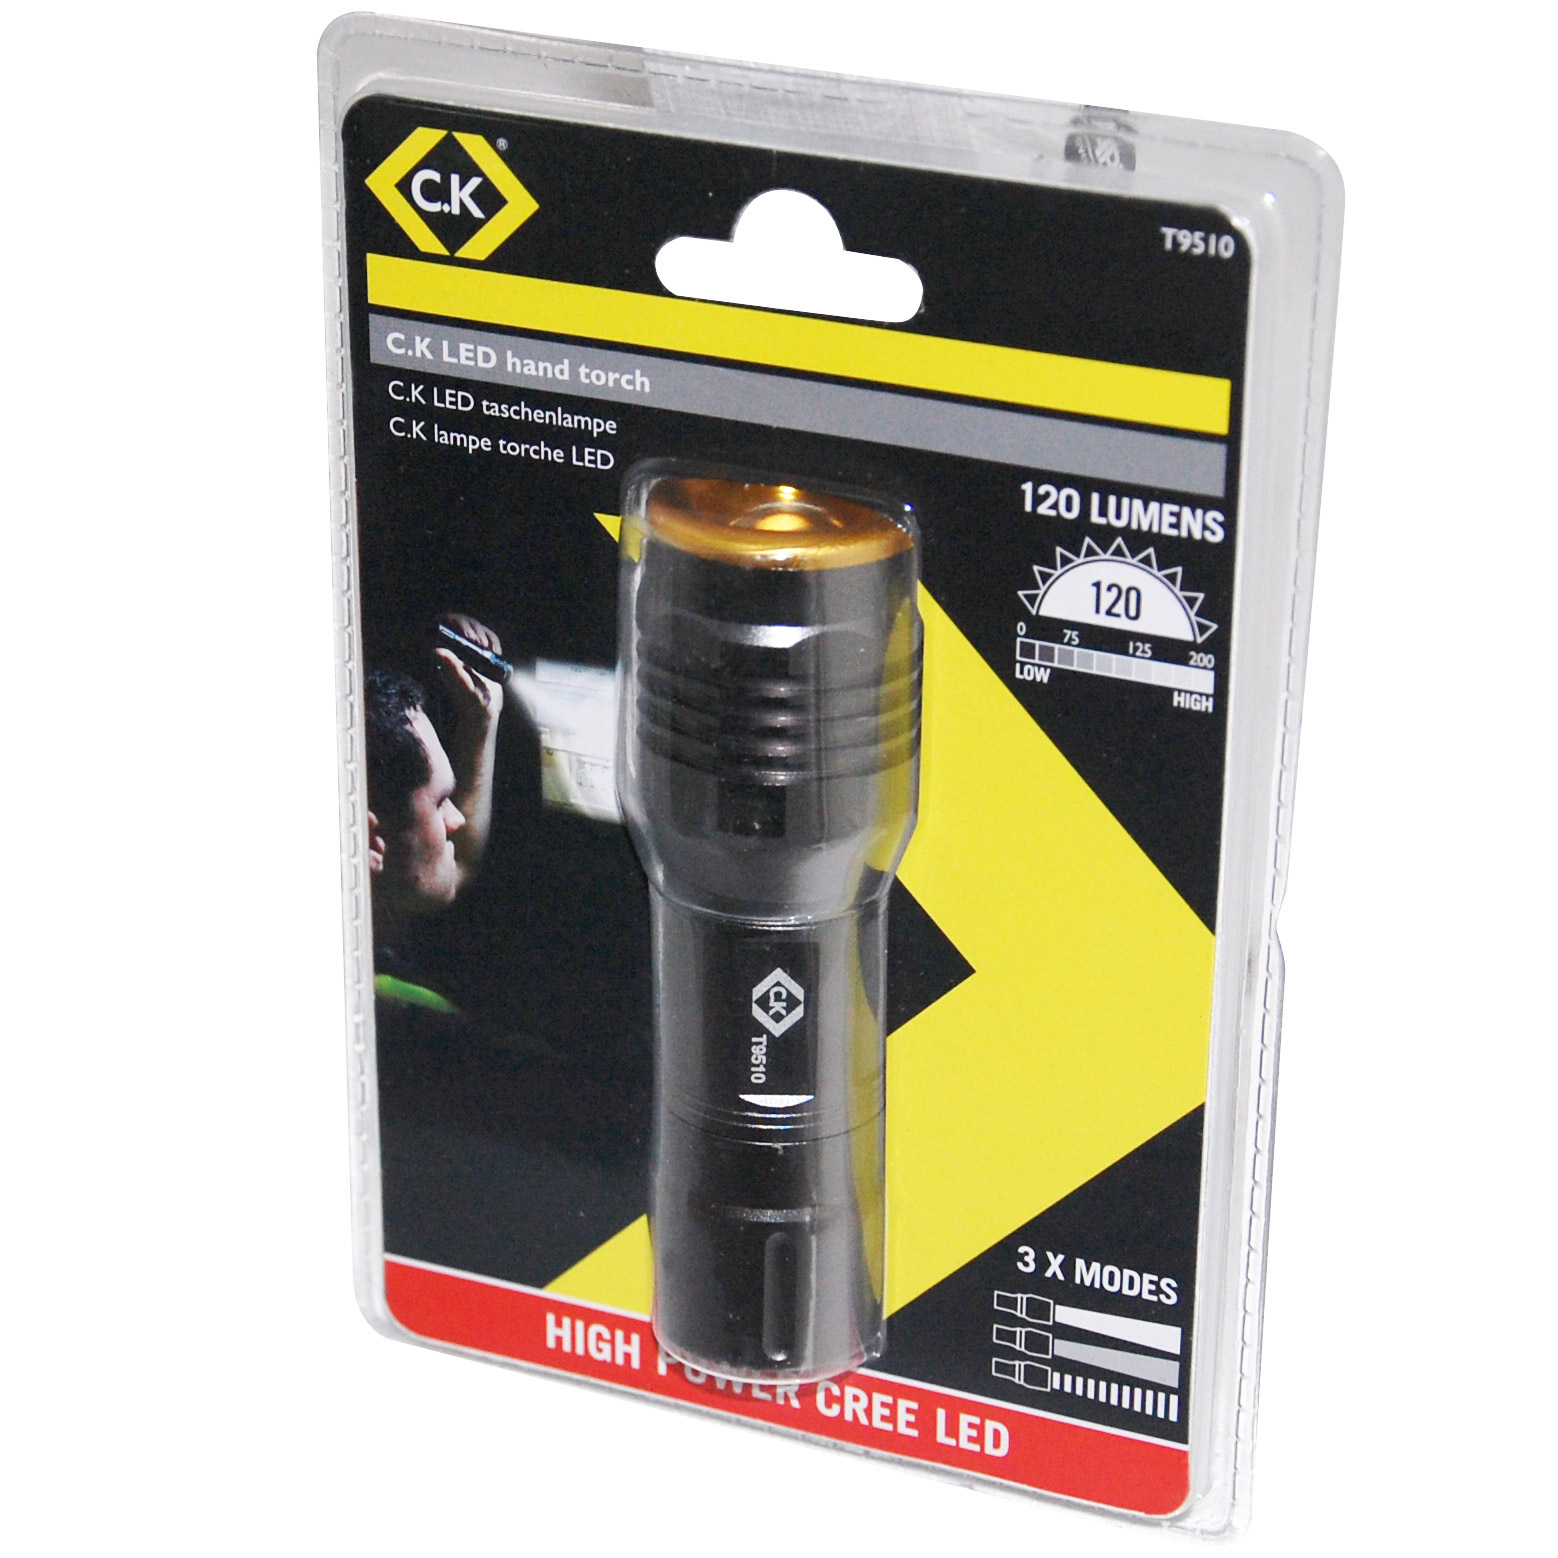 CK Tools T9510 LED Hand Torch 120 Lumens 